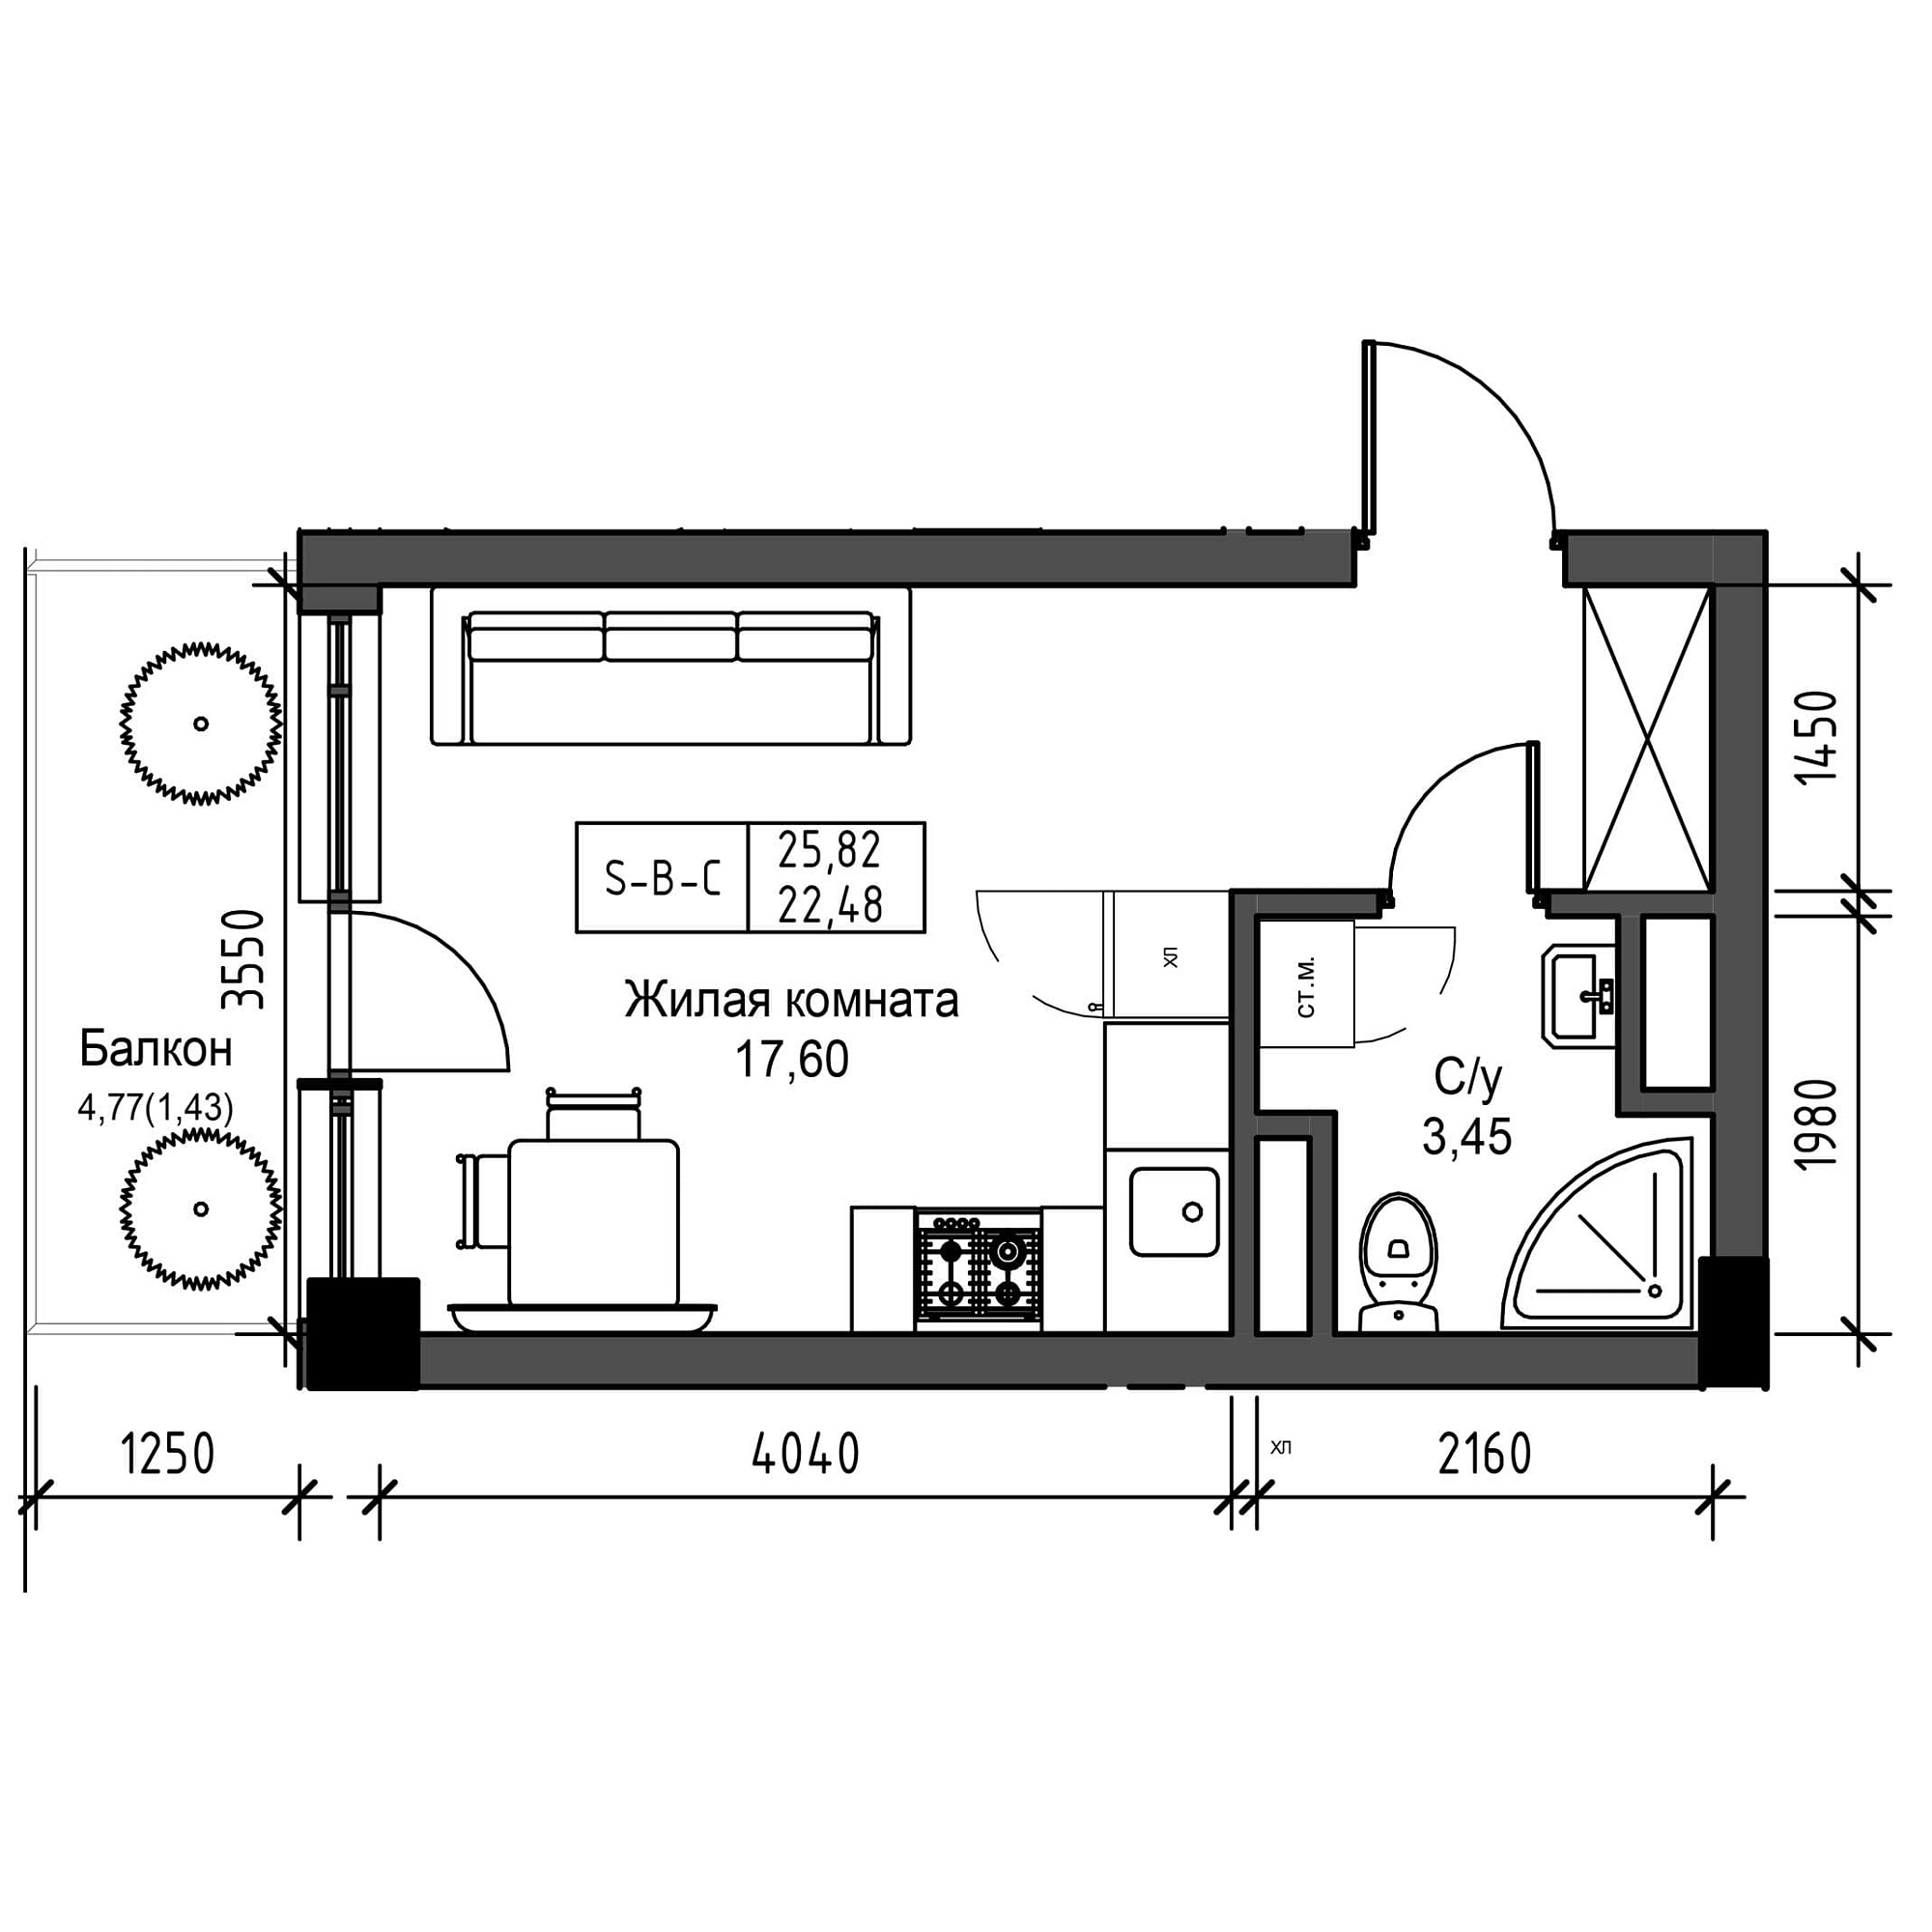 Планування Smart-квартира площею 22.48м2, UM-001-06/0011.